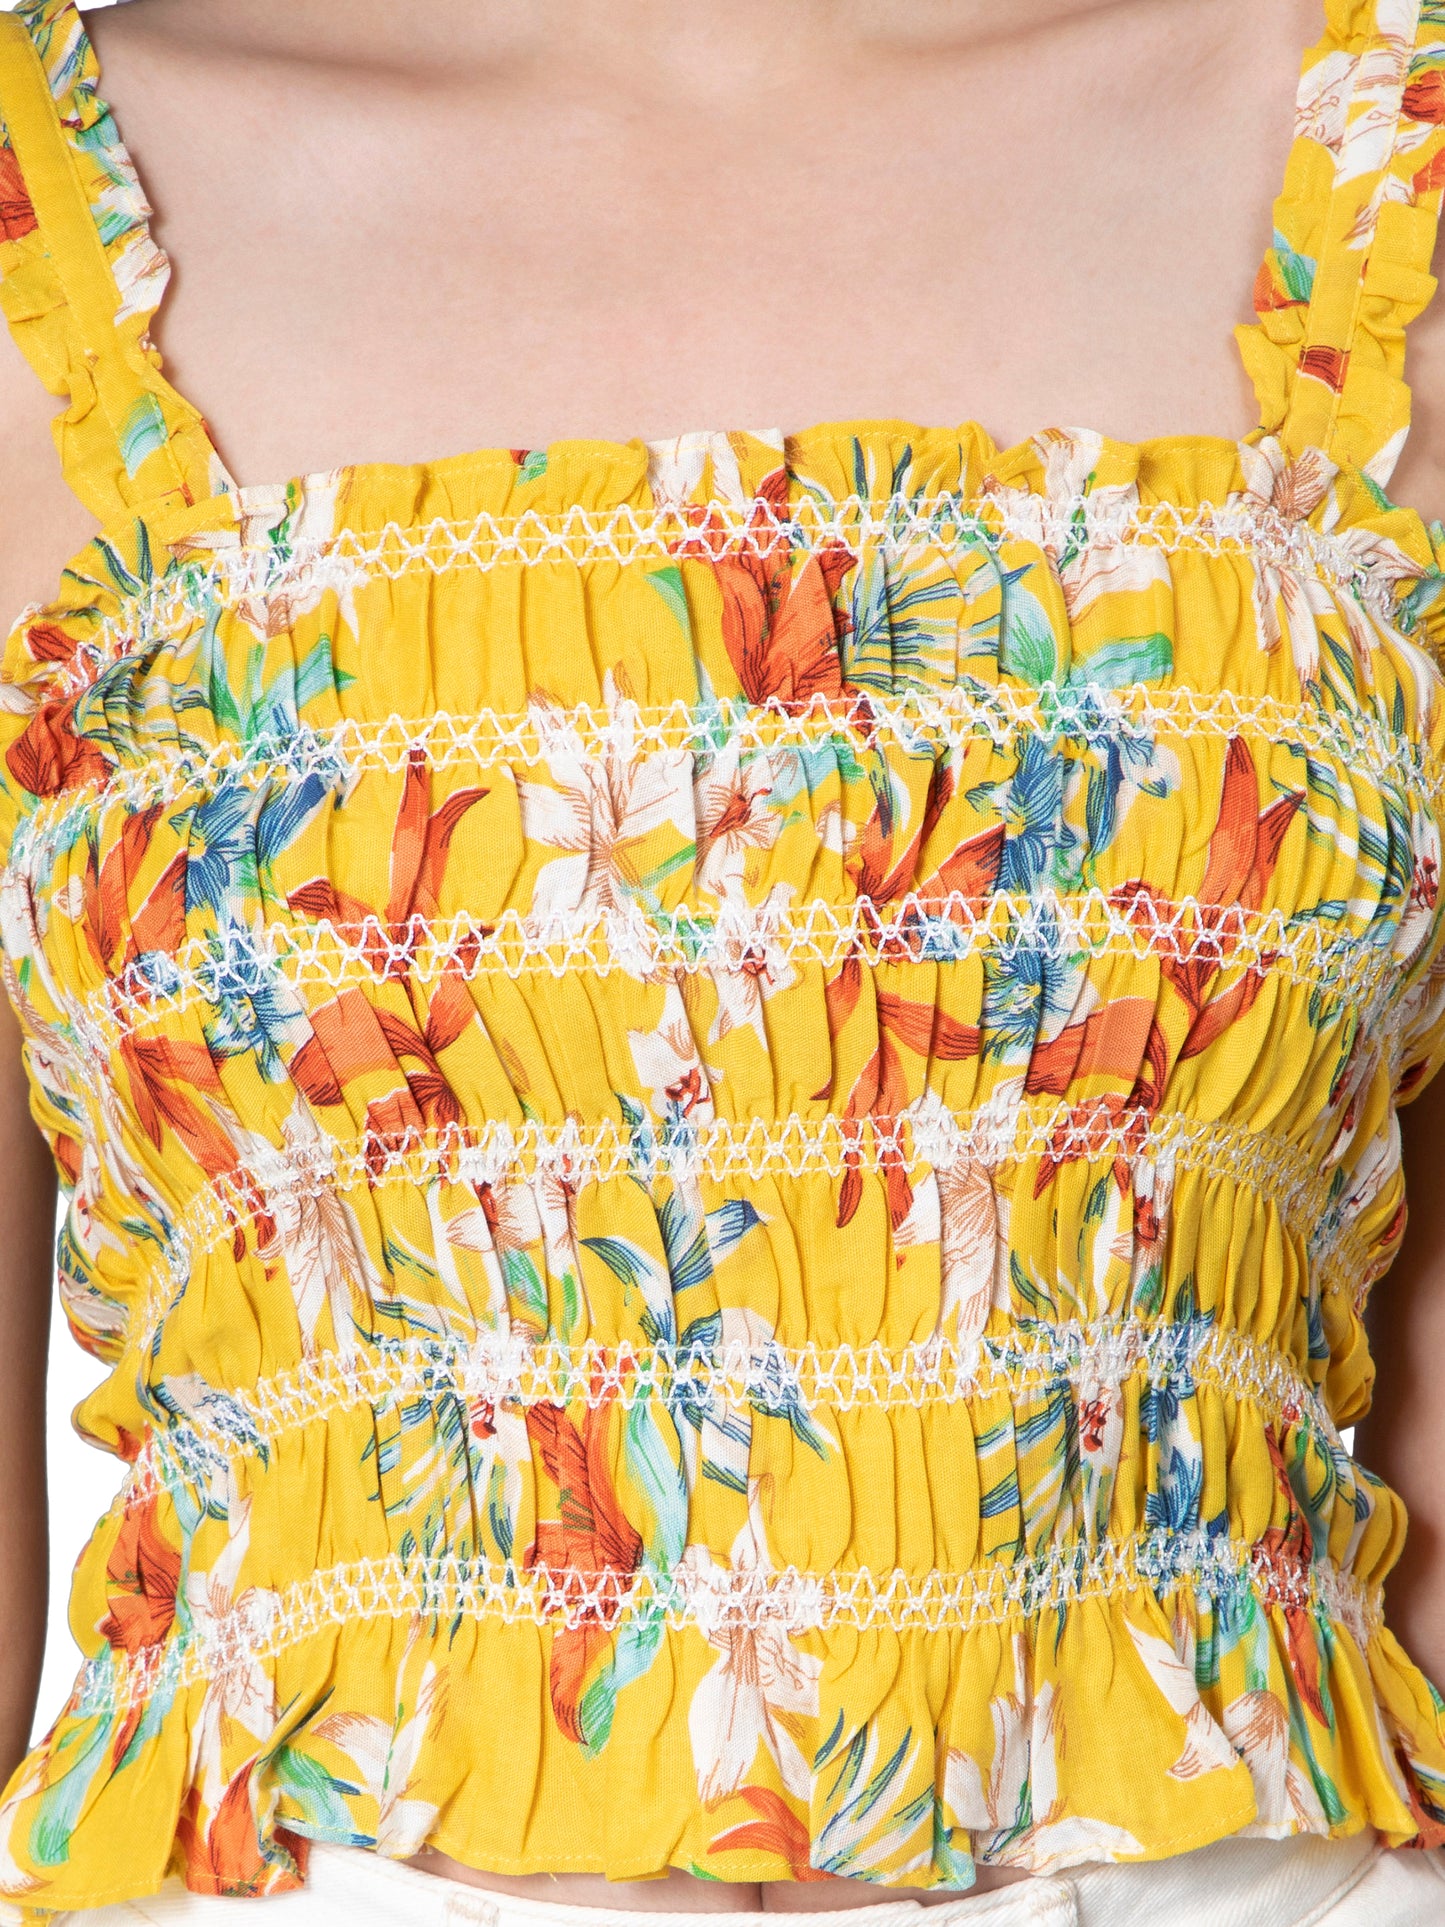 NUEVOSDAMAS Women Floral Printed Smocking top - Yellow/Multi